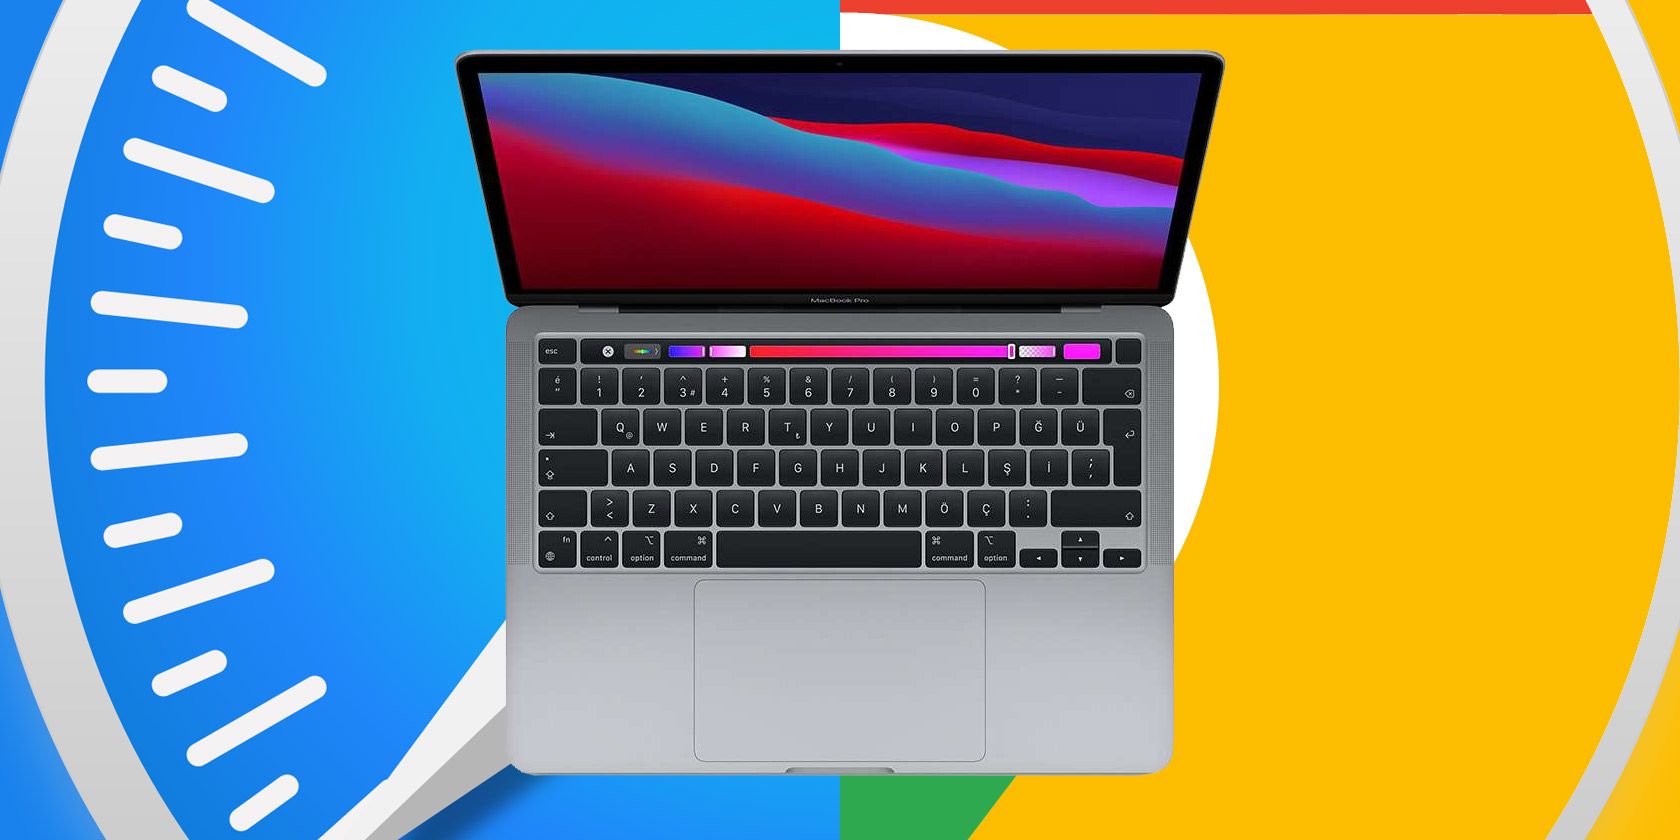 Safari and Chrome logos behind a MacBook